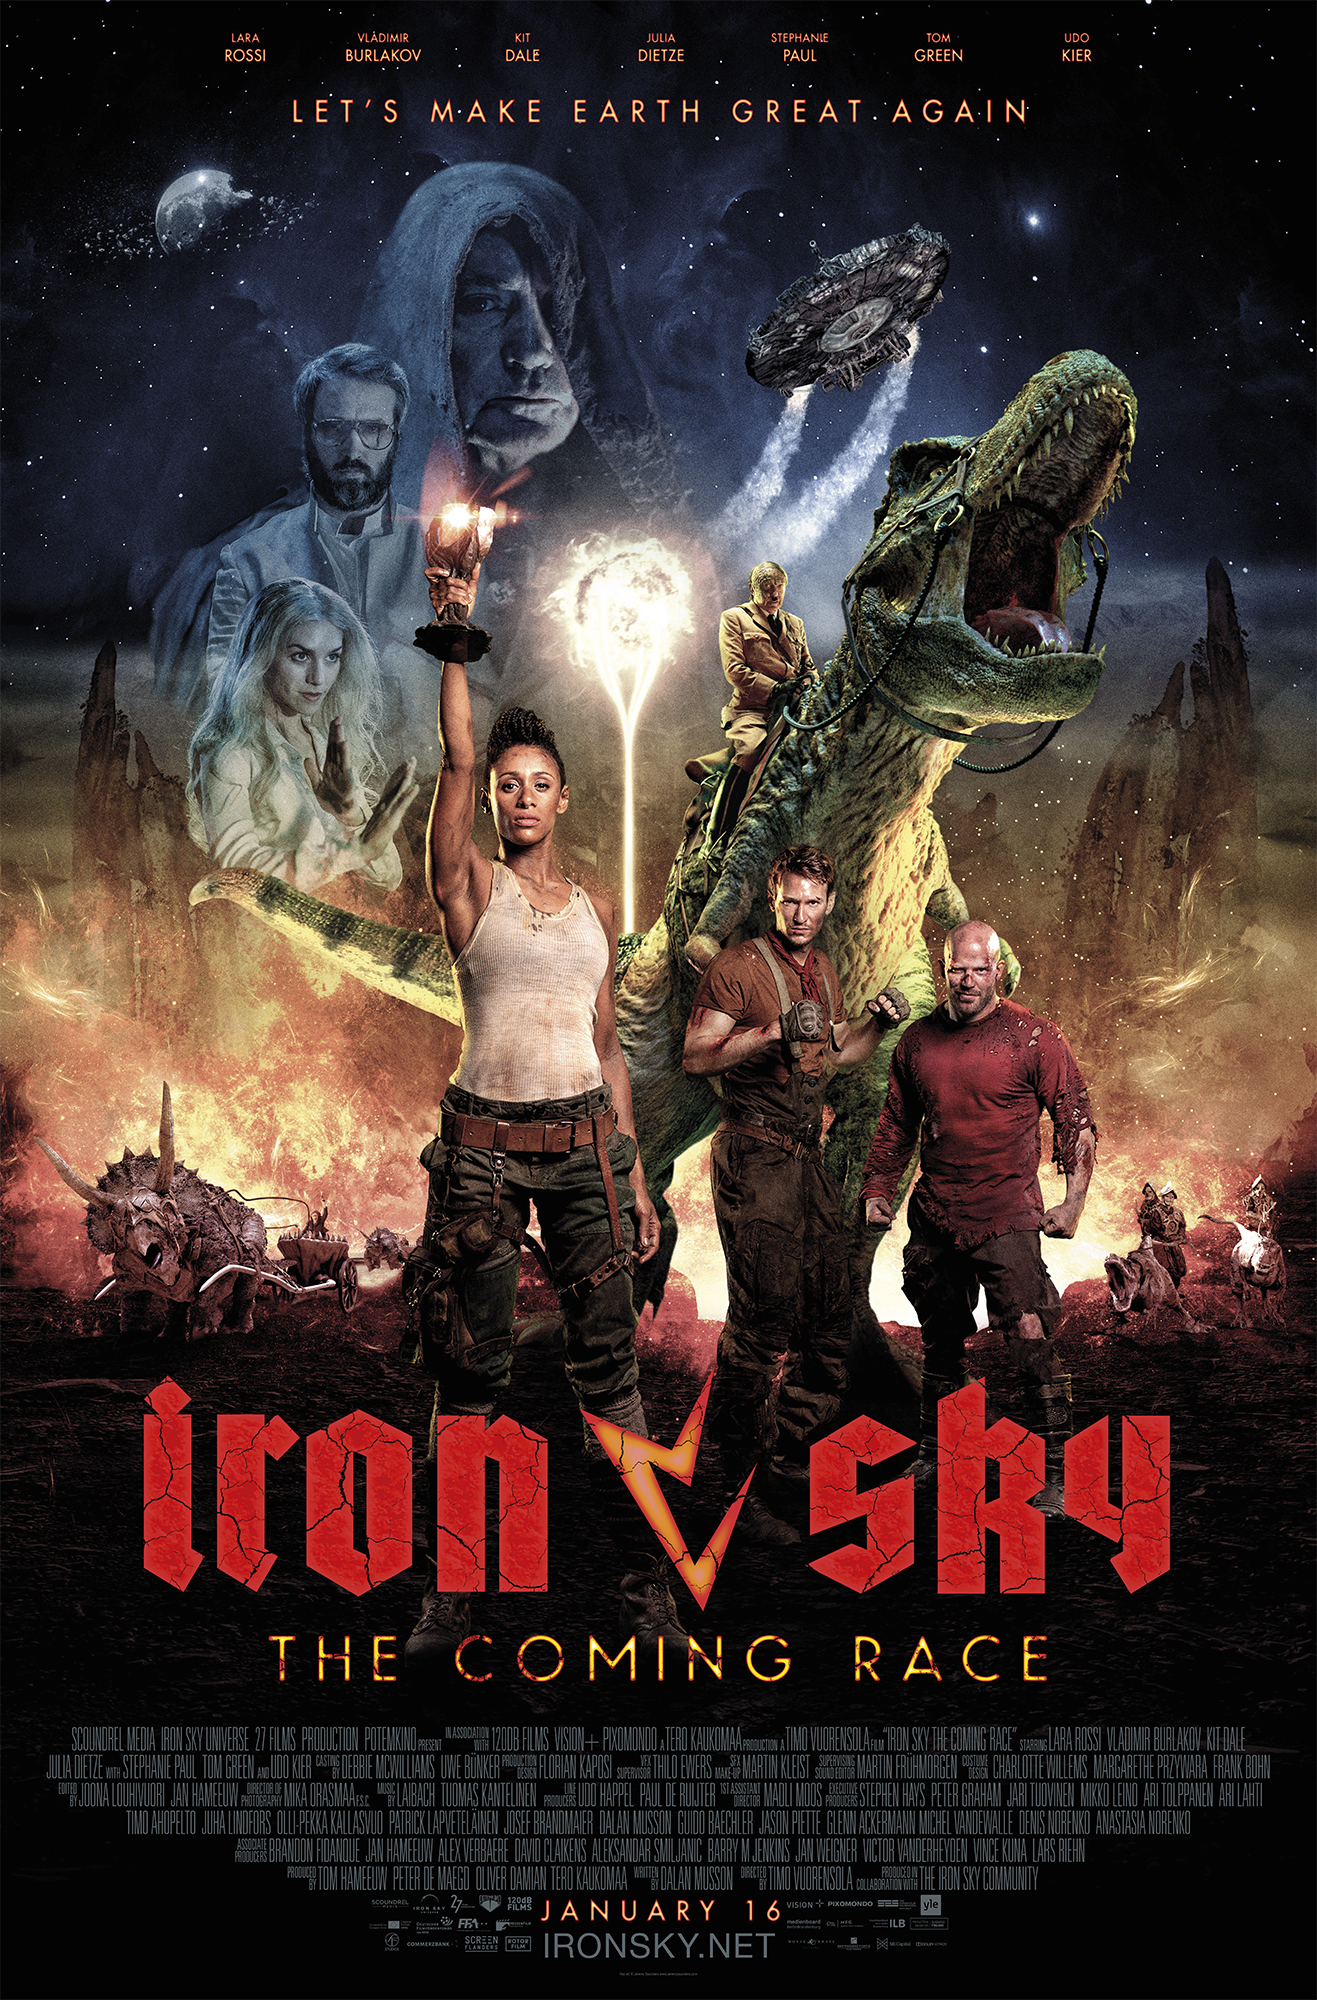 iron sky the coming race (2019) ทัพเหล็กนาซีถล่มโลก 2 - ดูหนังออนไลน